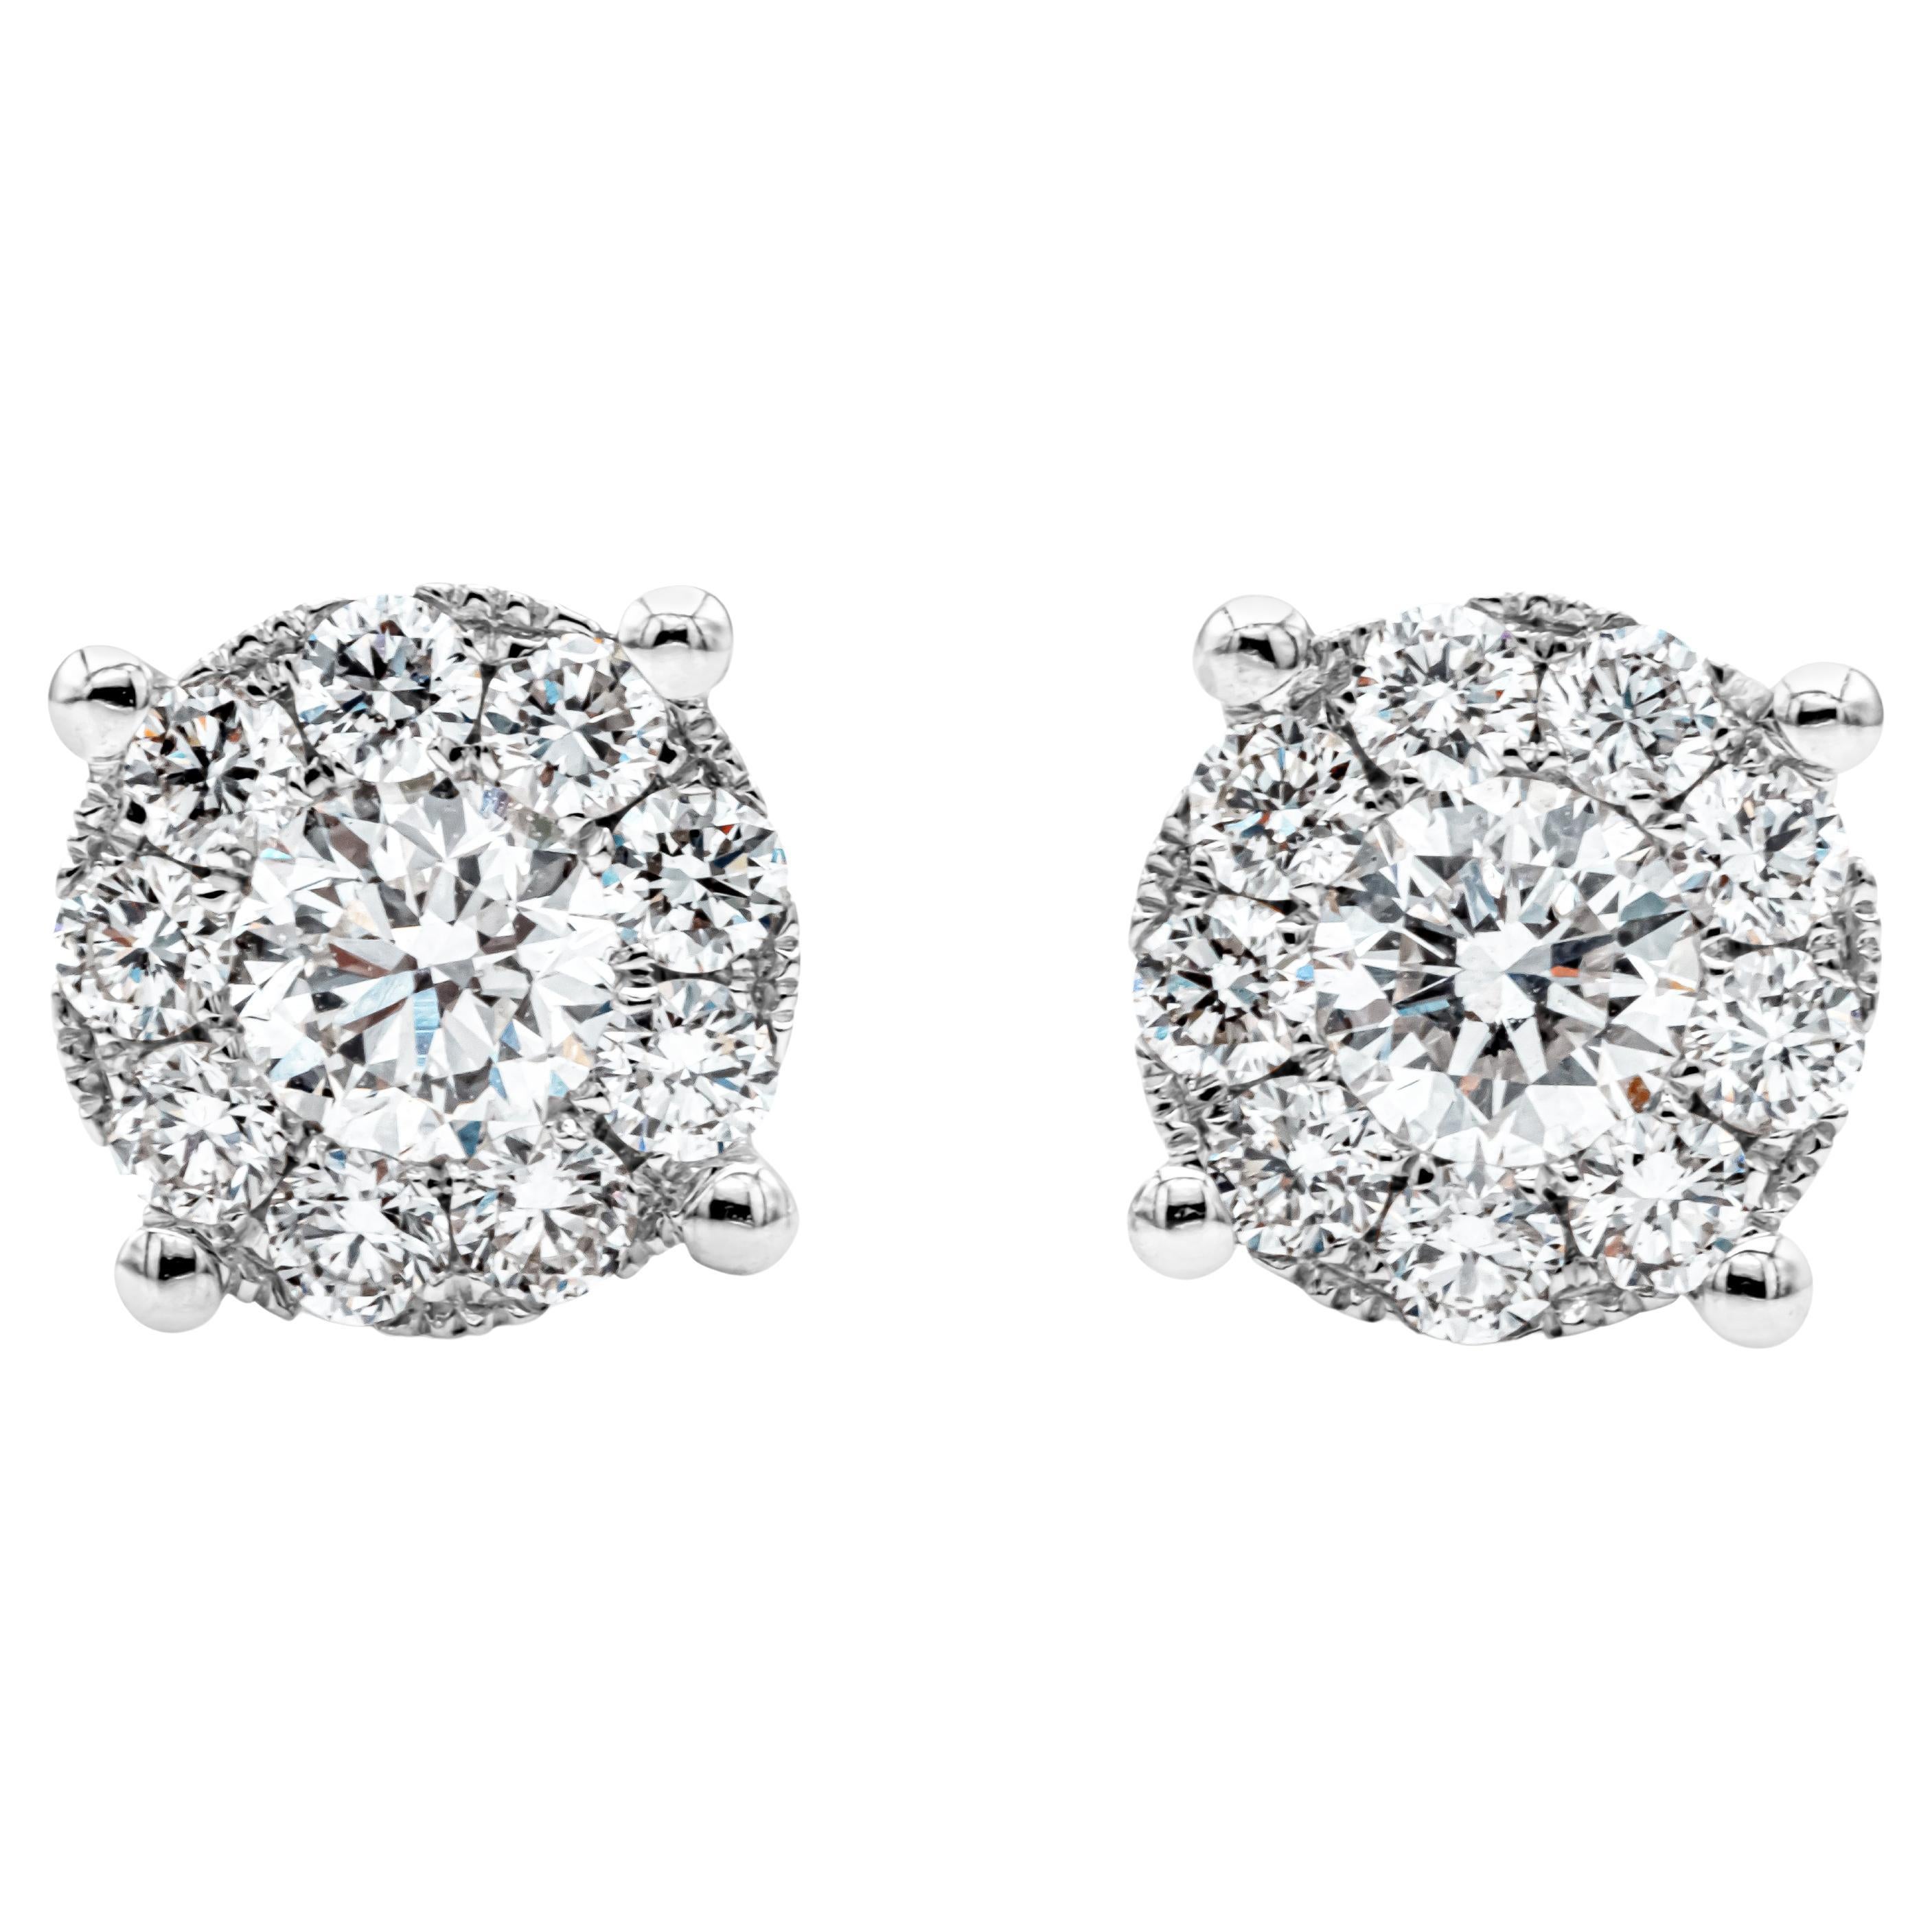 Roman Malakov 1.13 Carats Total Brilliant Round Diamond Cluster Stud Earrings